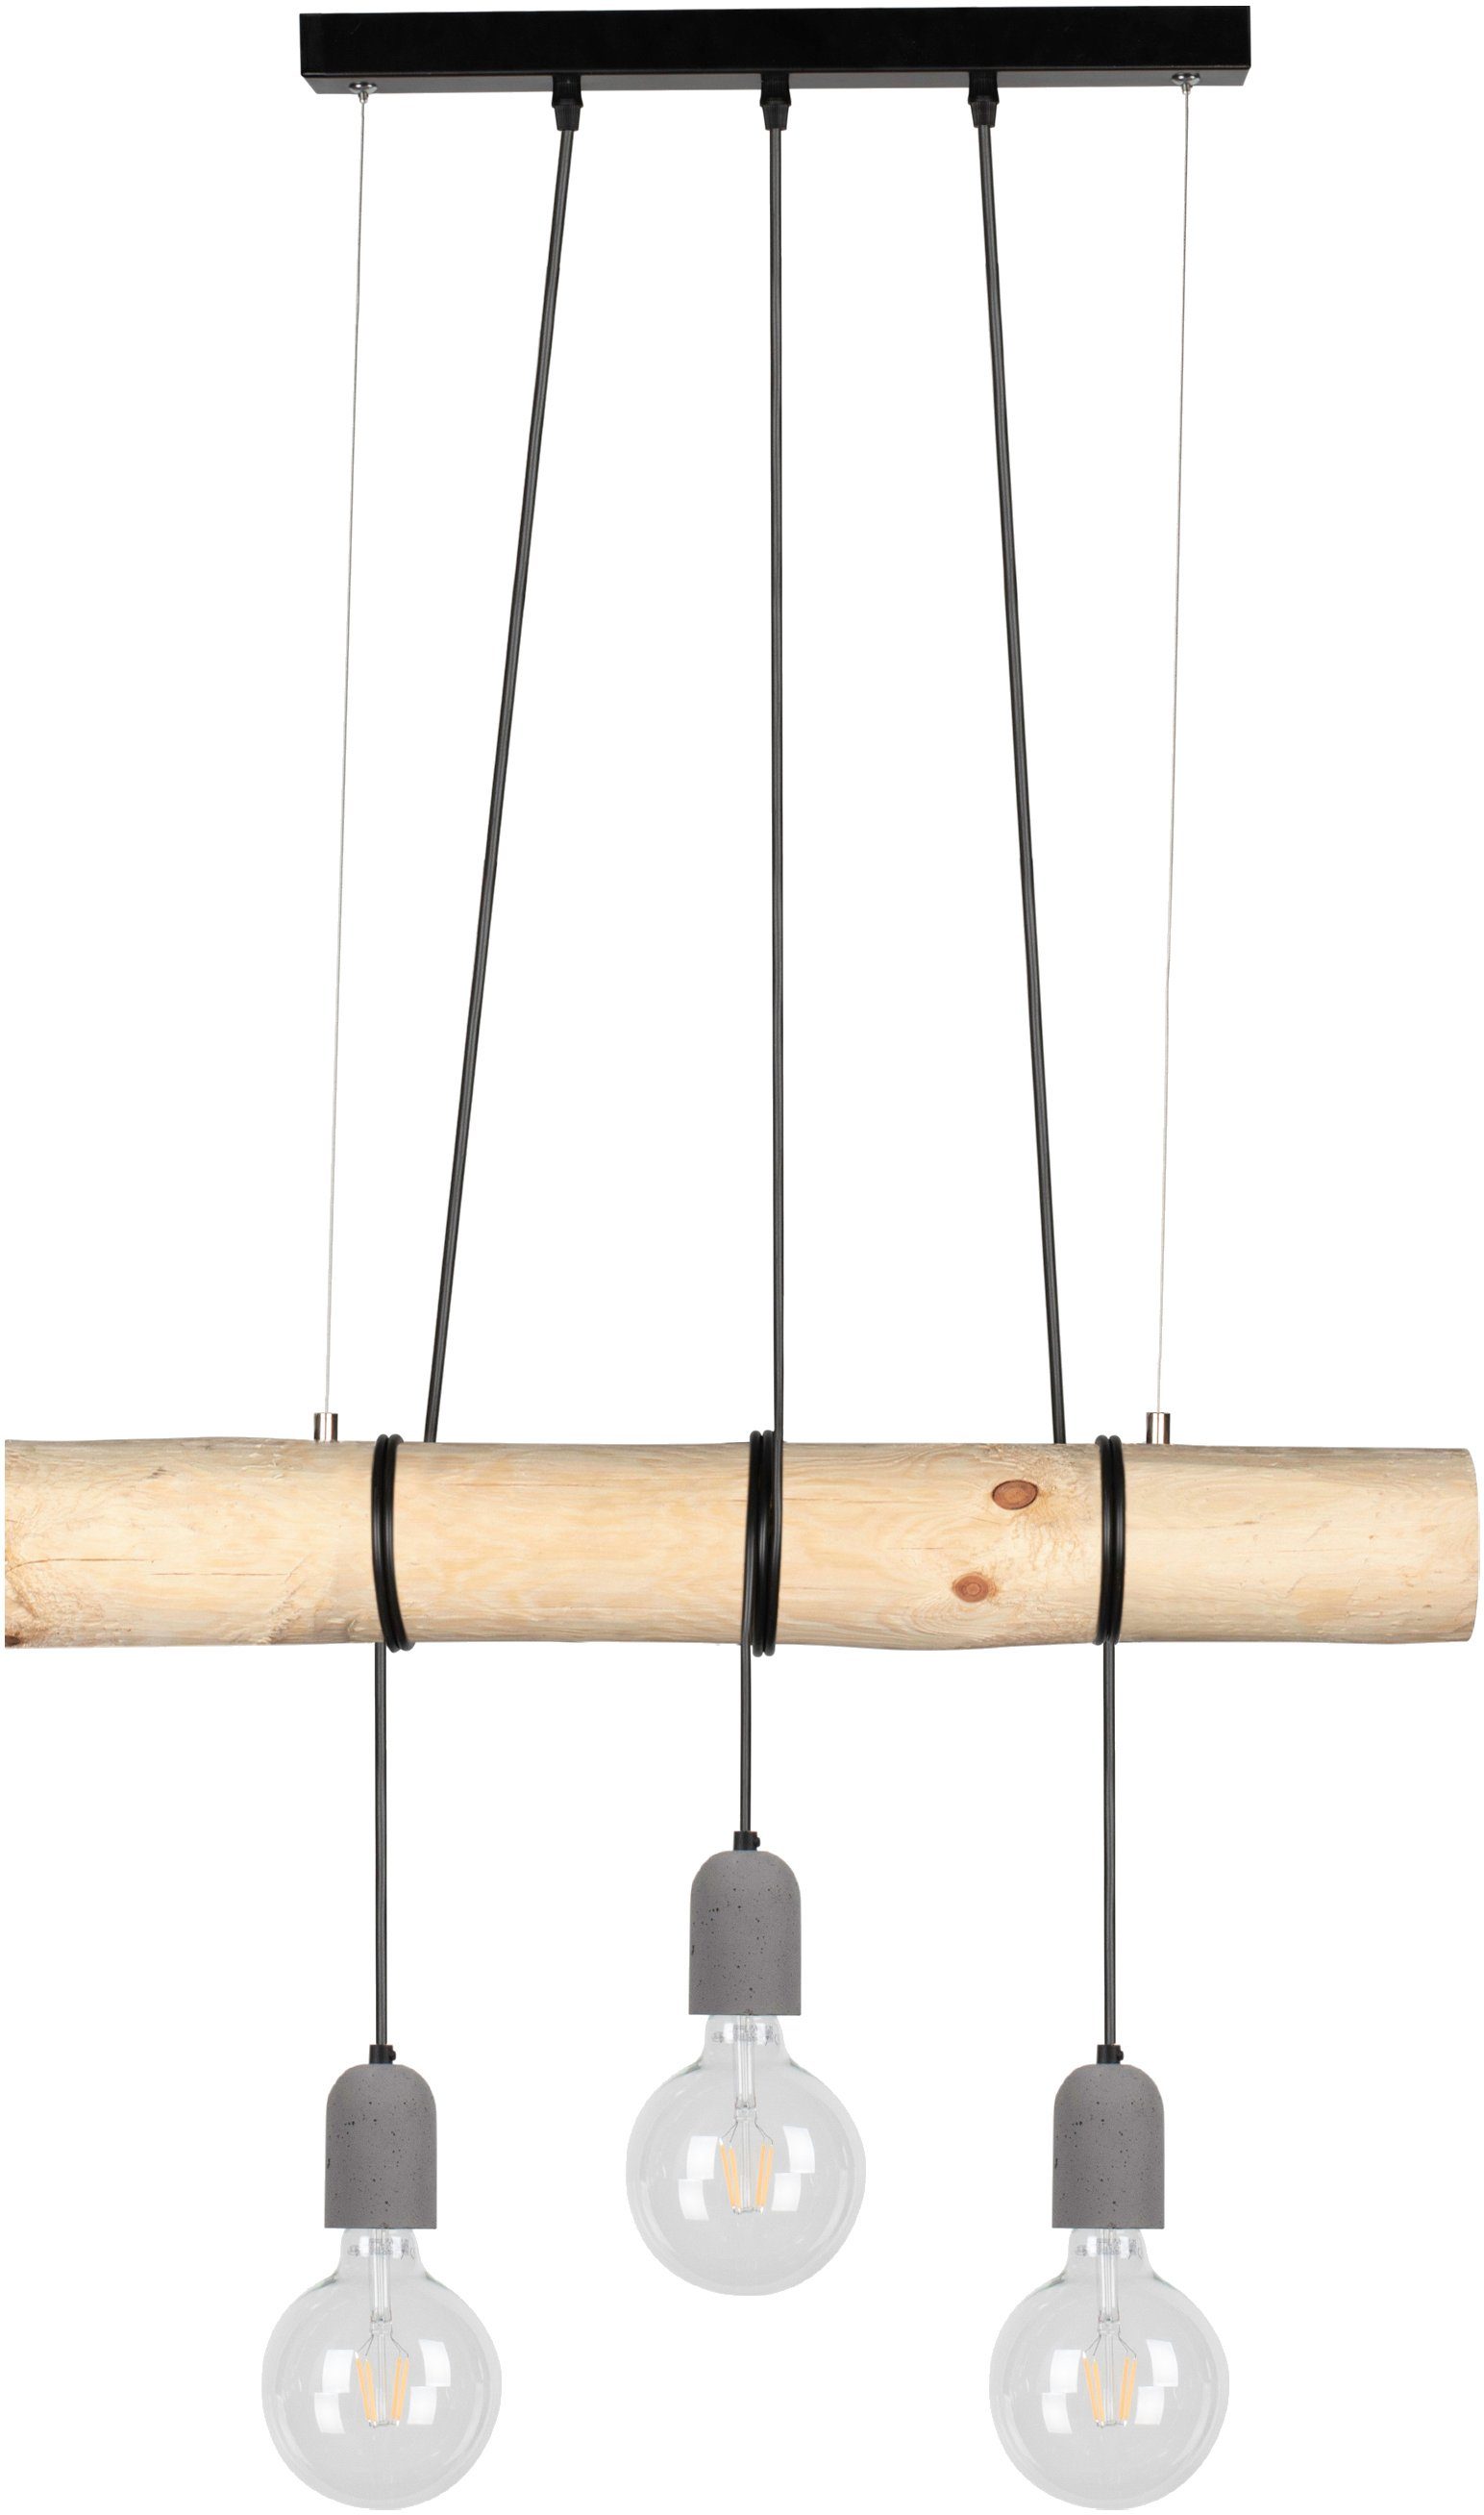 spot light hanglamp trabo concrete hanglamp, houten balk van grenenhout oe 8-12 cm, echt beton grijs